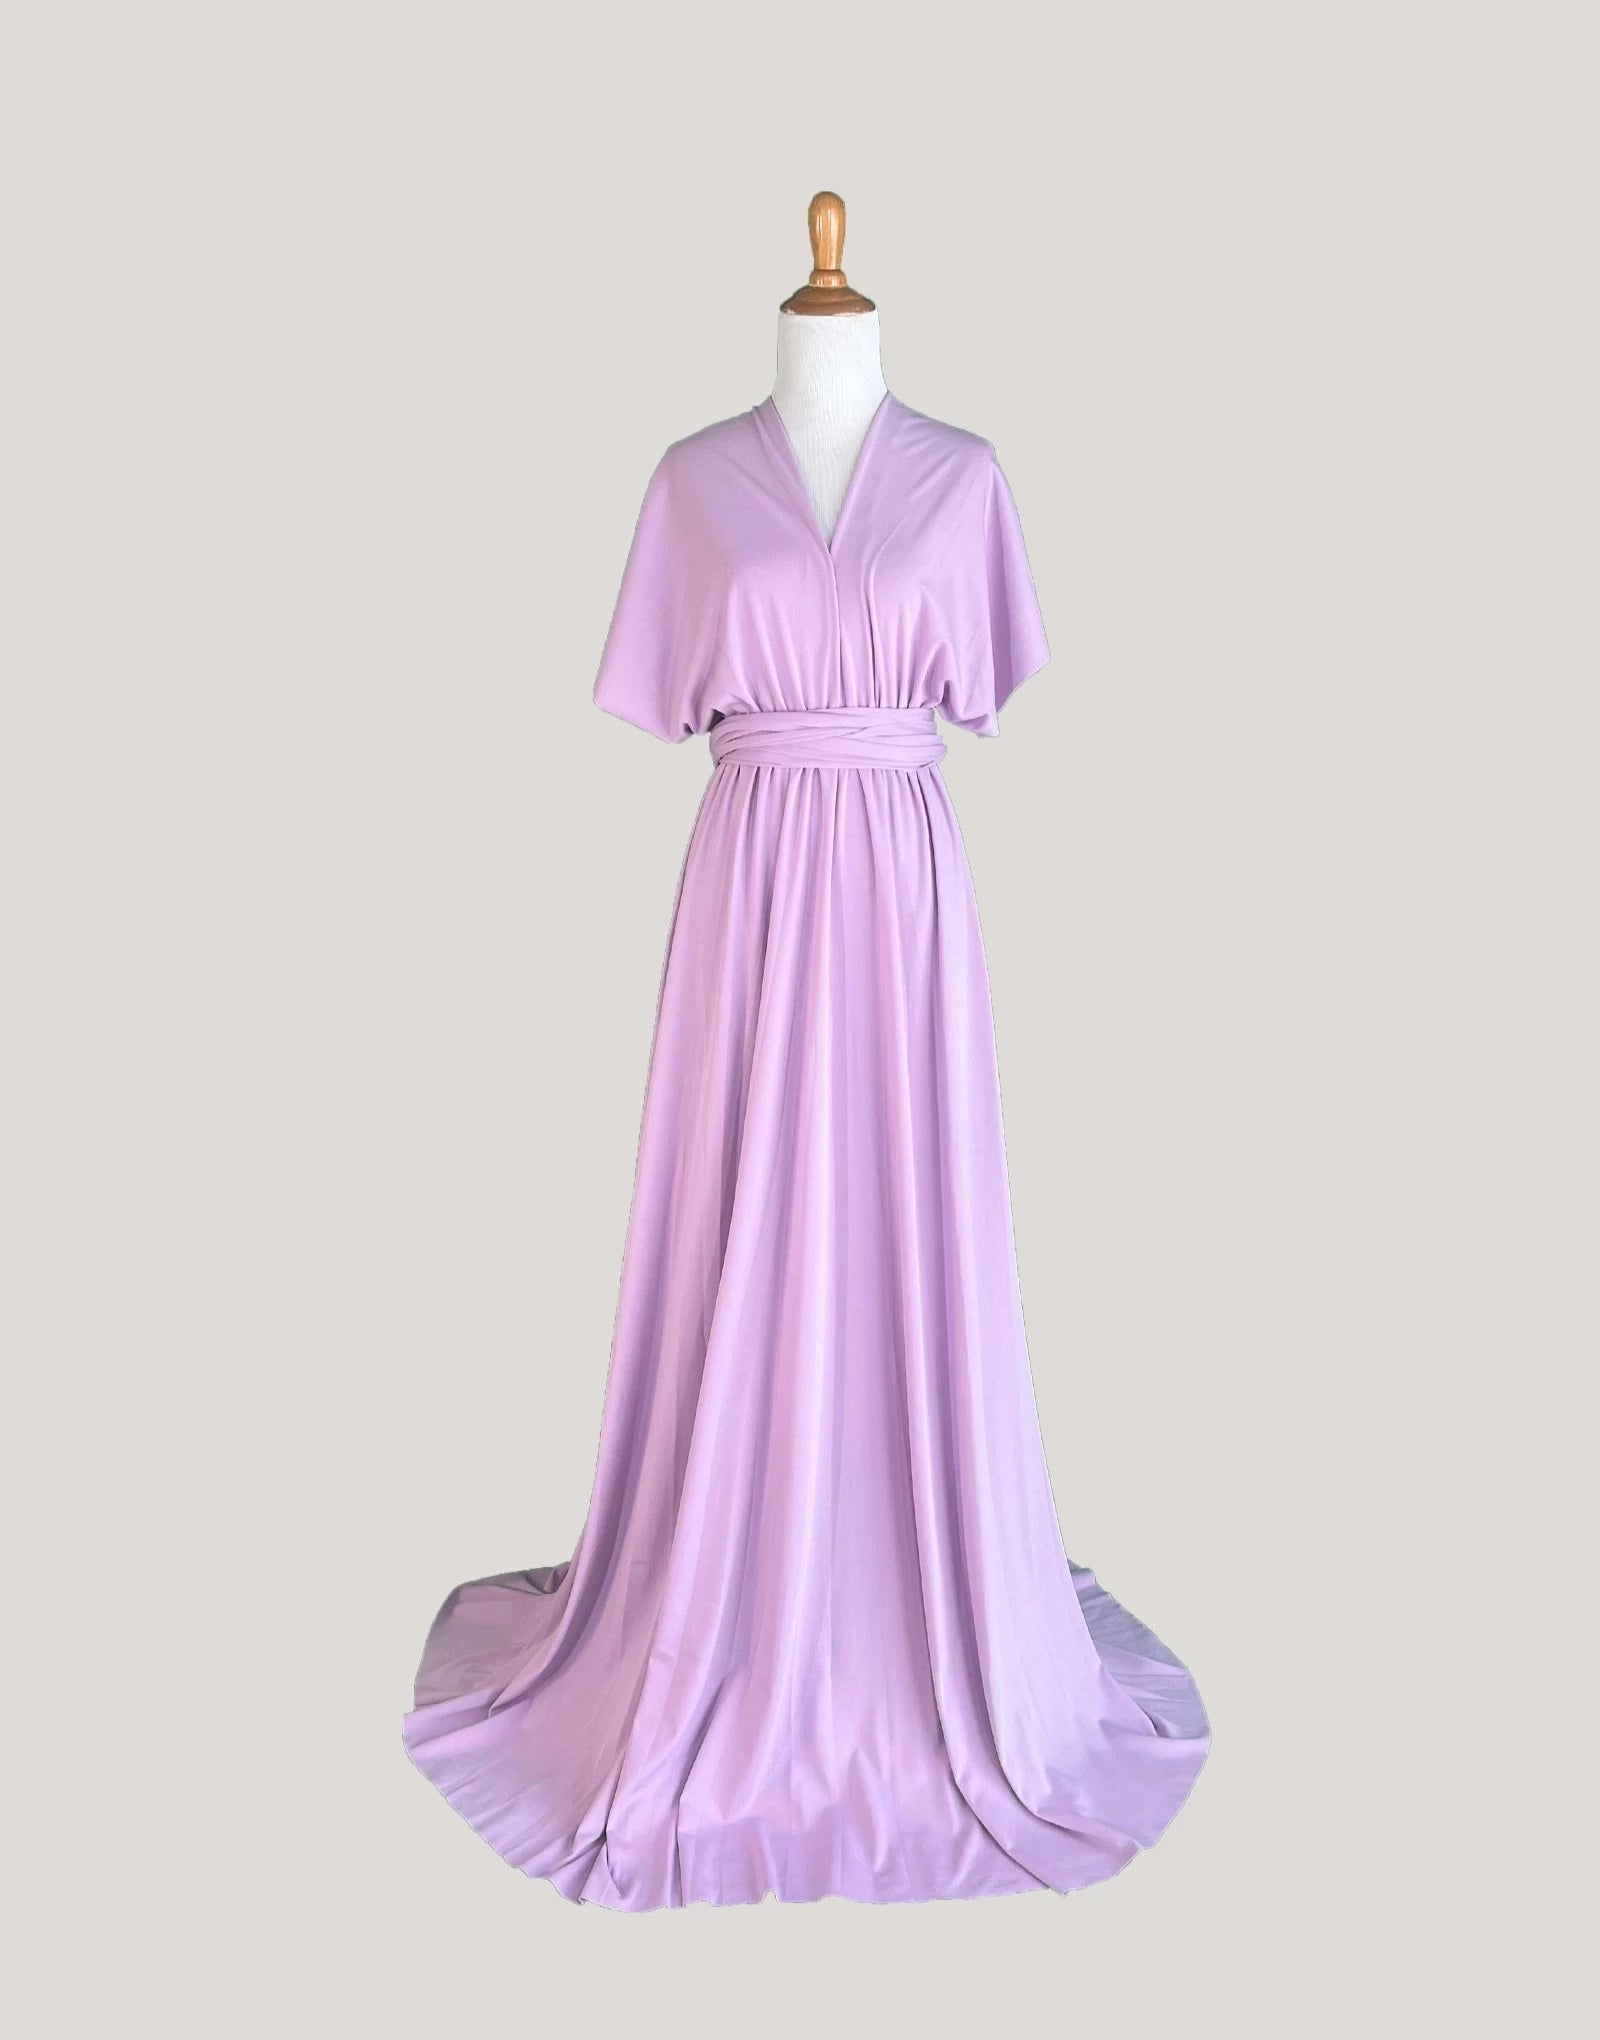 Lavender/Wisteria Infinity Dress/ Wrap Convertible Bridesmaid Dress